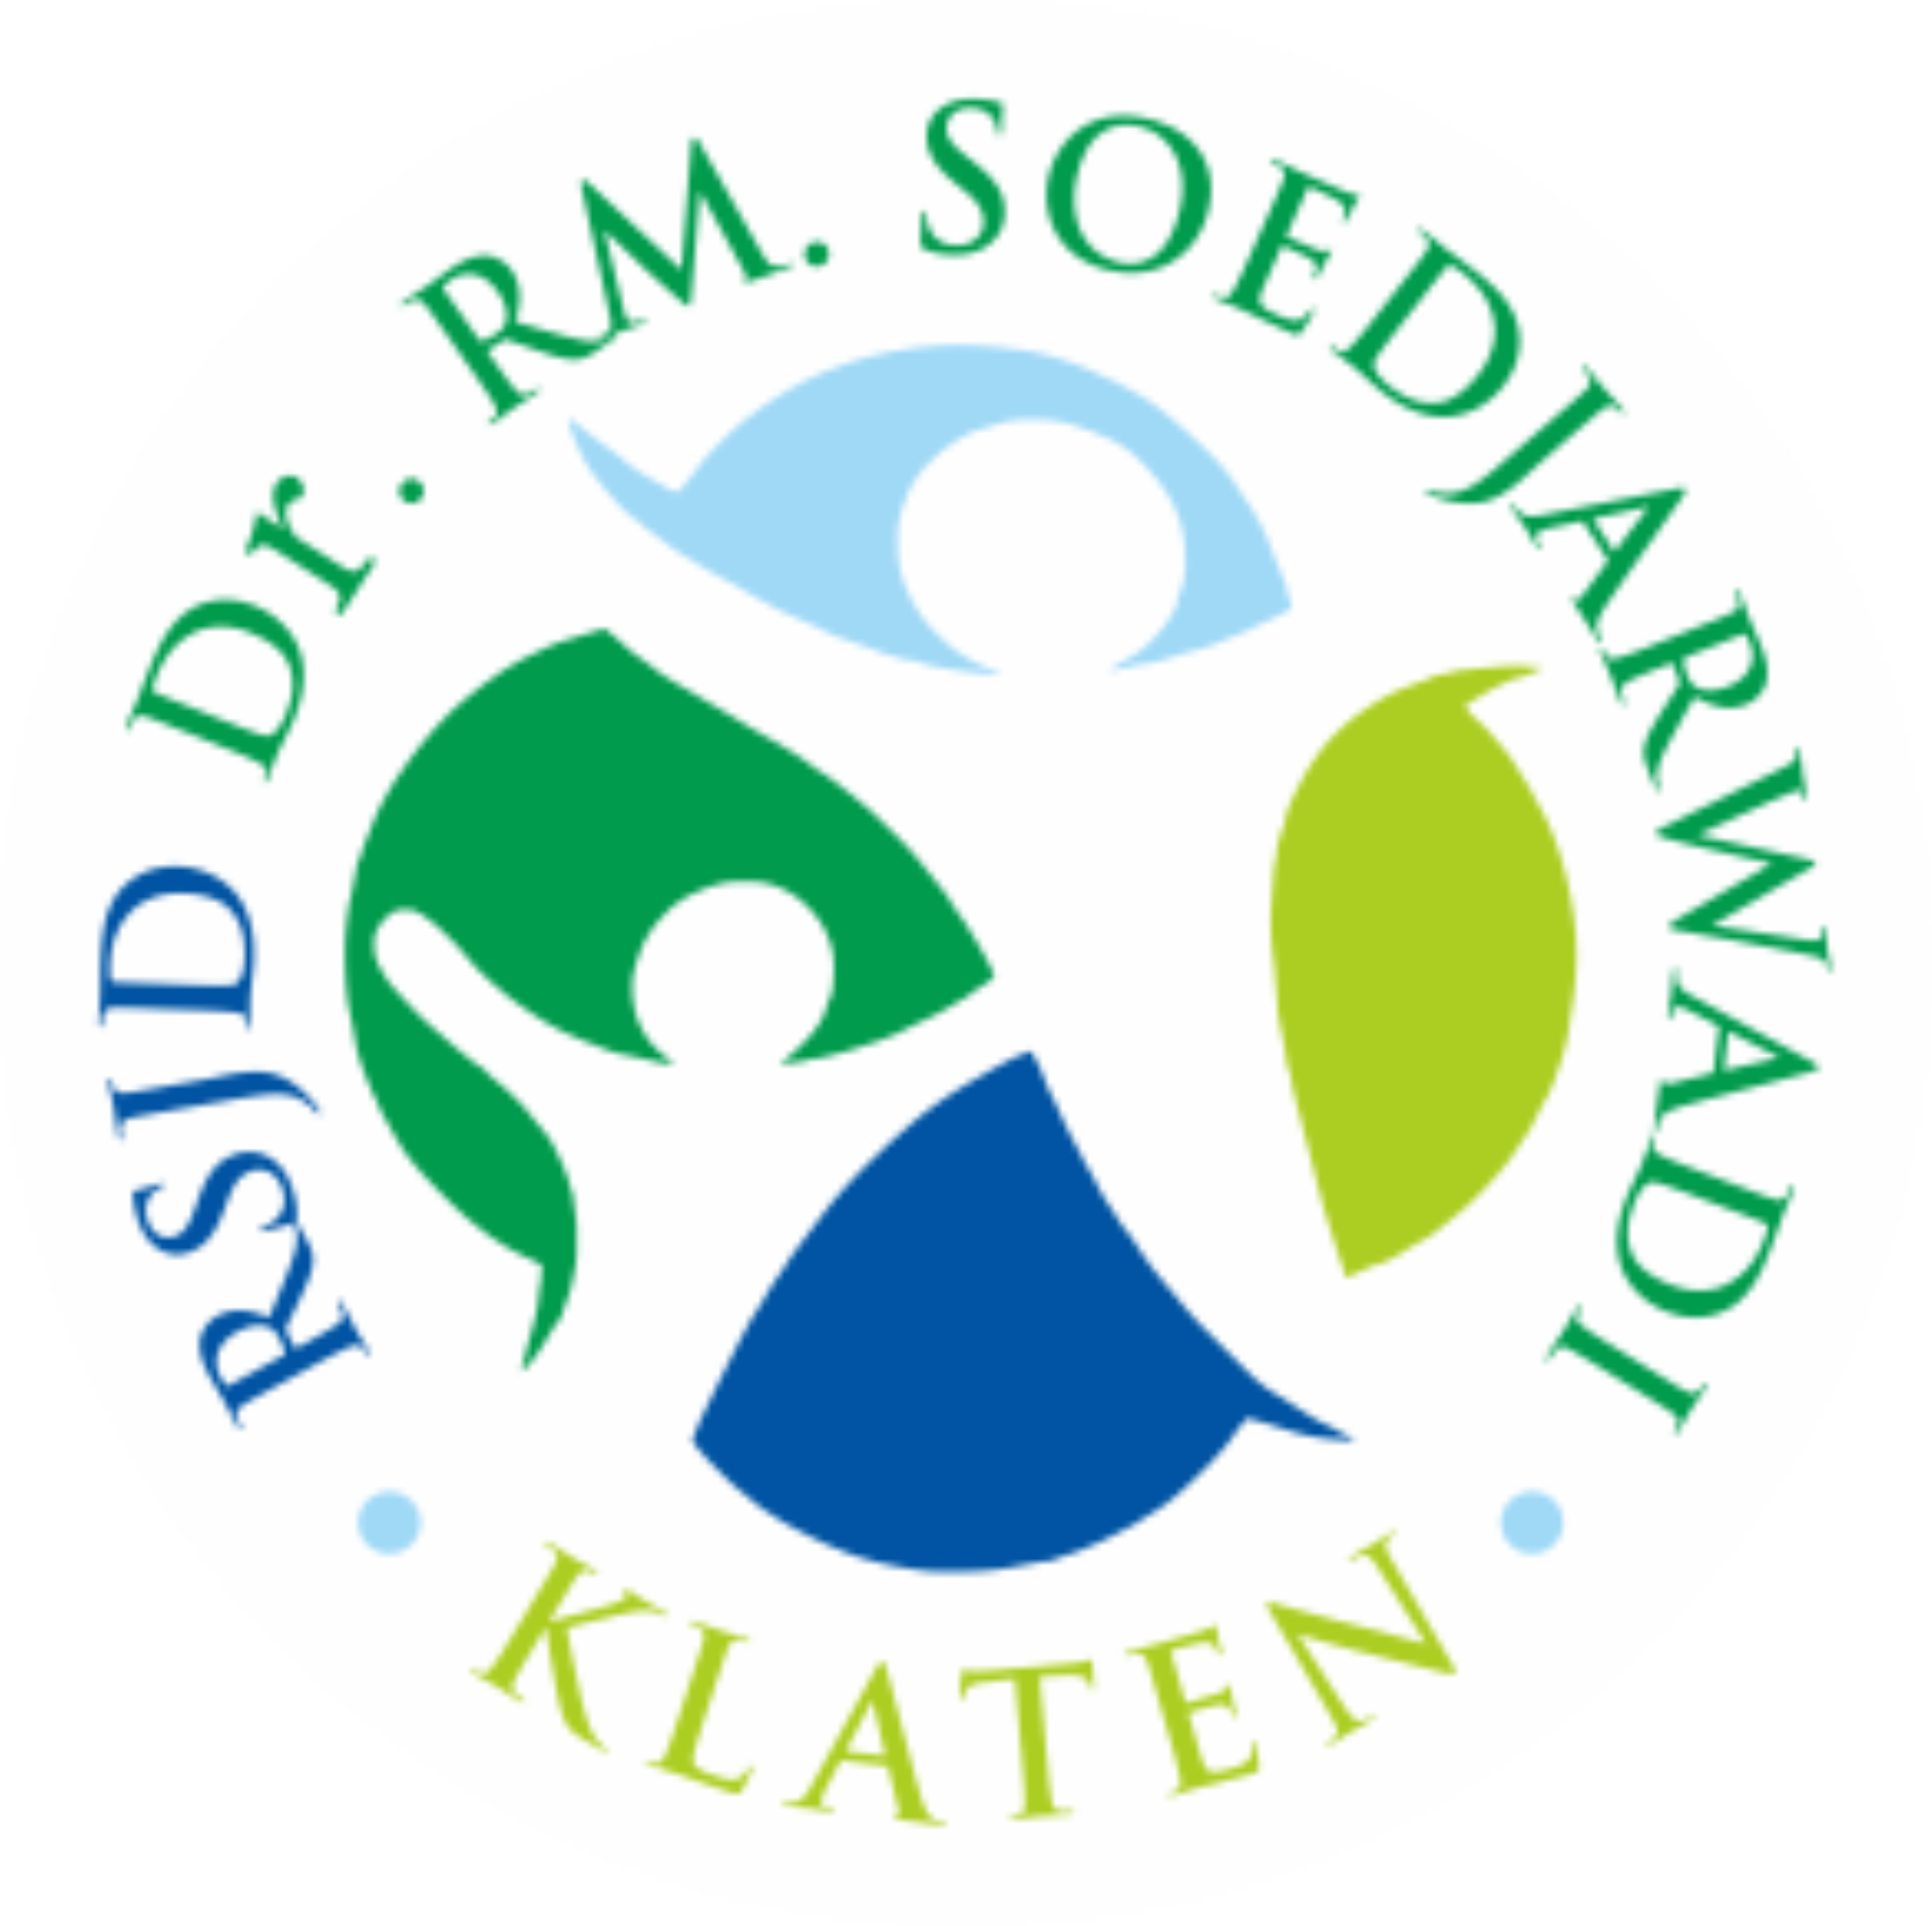 logo rs